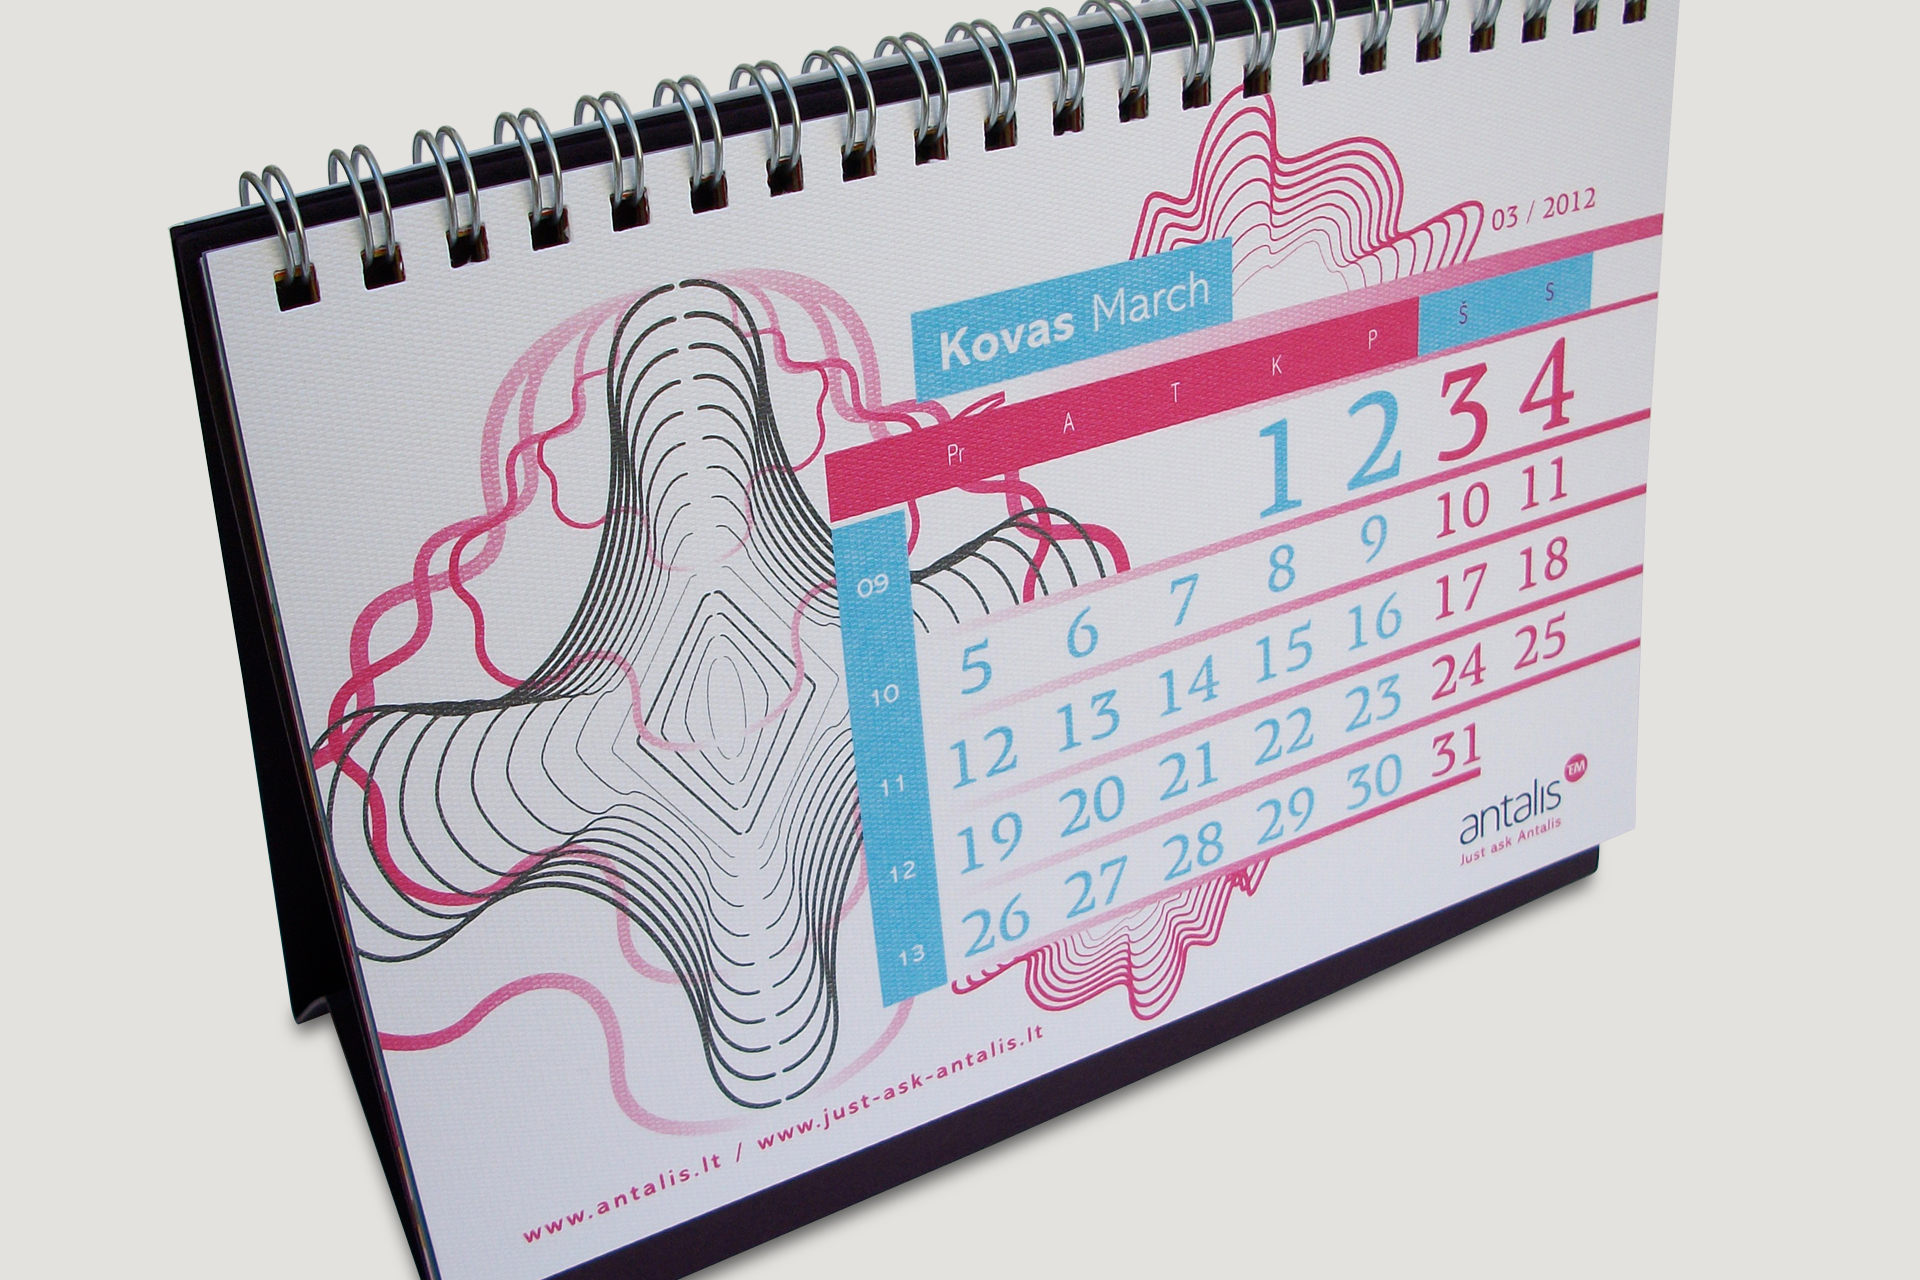 Antalis Calendar 2012